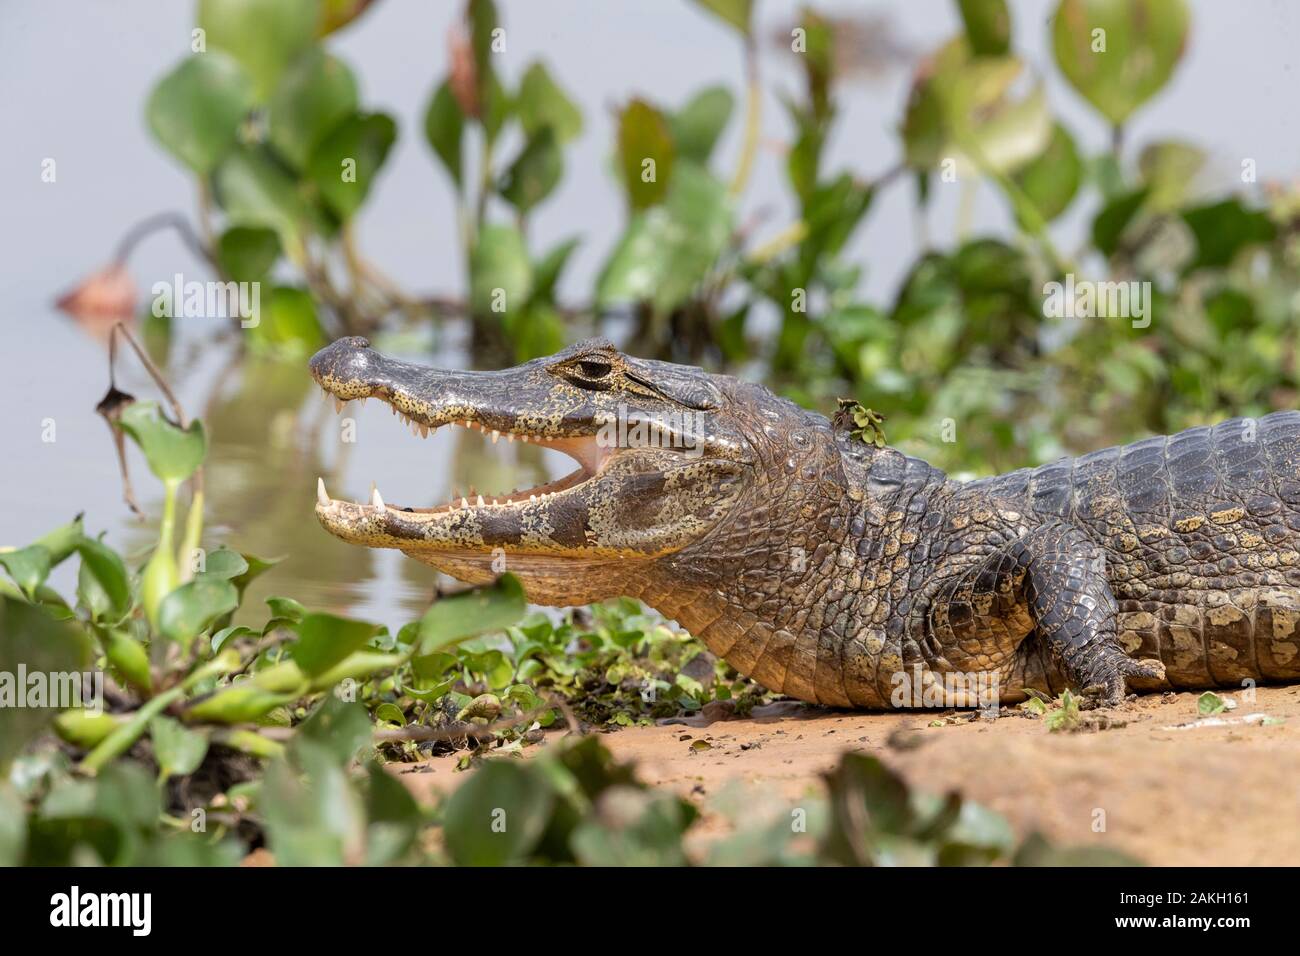 Brazil, Mato Grosso, Pantanal area, Spectacled caiman (Caiman crocodilus), Stock Photo